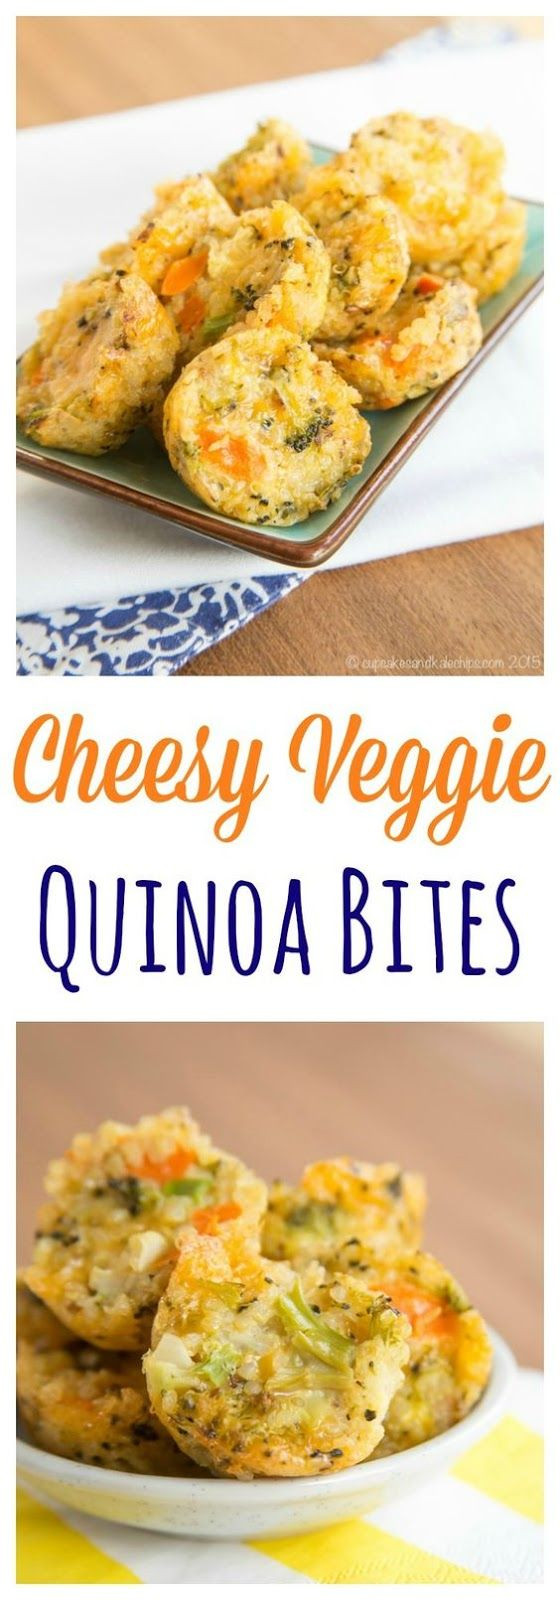 Quinoa Baby Food Recipes
 CHEESY VEGGIE QUINOA BITES